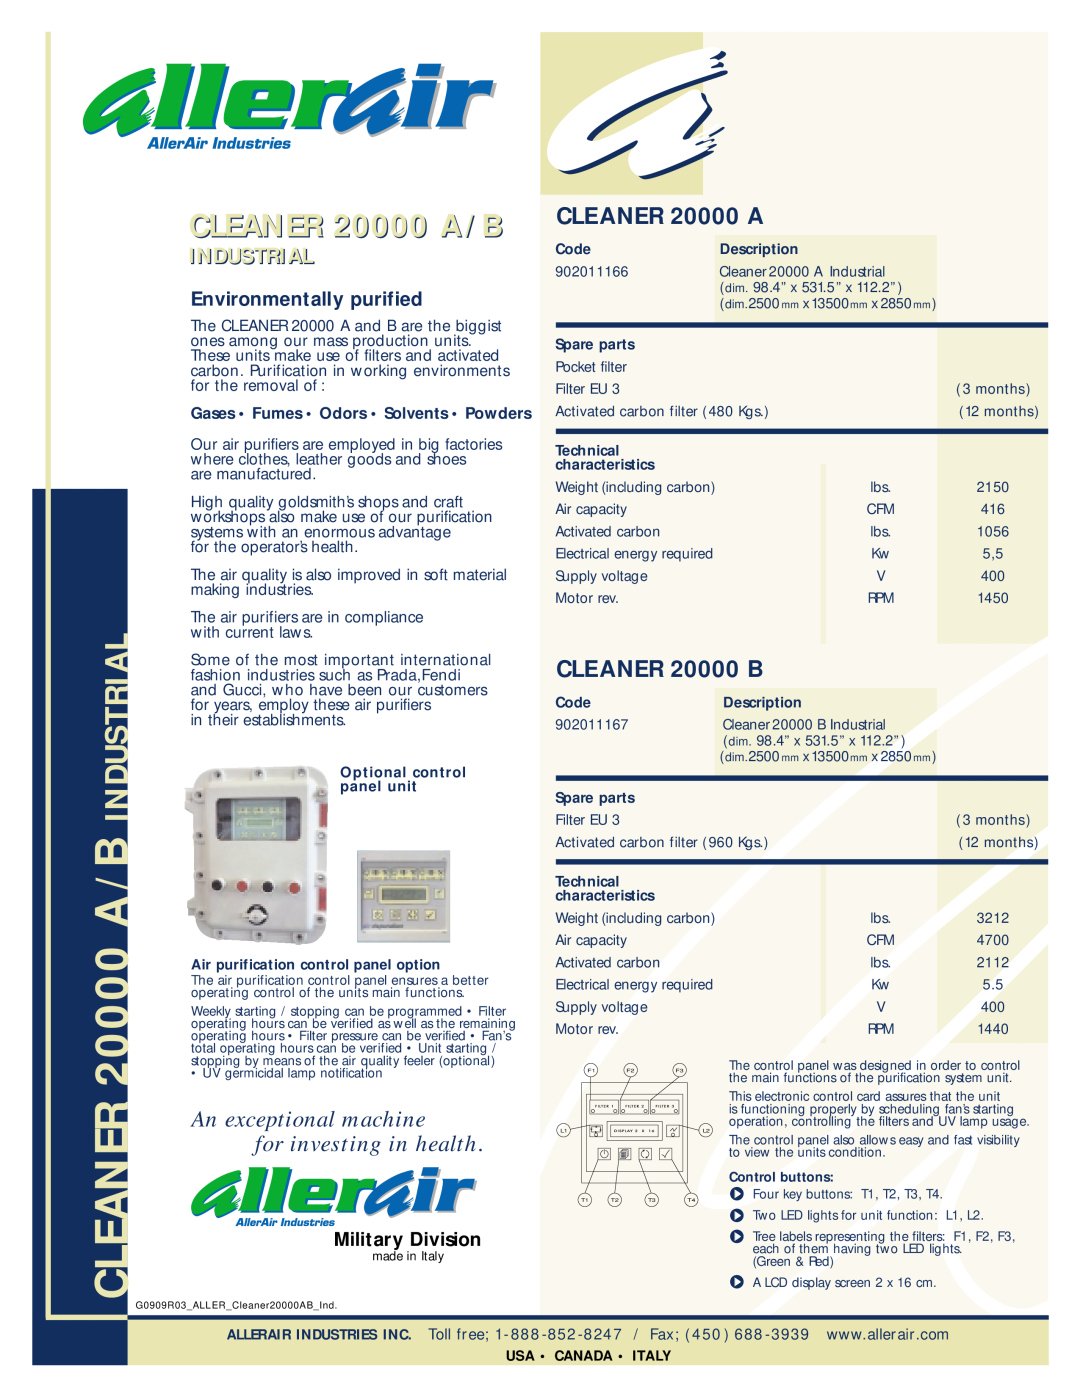 AllerAir AC-20000 A manual 20000 A / B INDUSTRIAL, Cleaner, CLEANER 20000 A /B, Industrial, Environmentally purified 